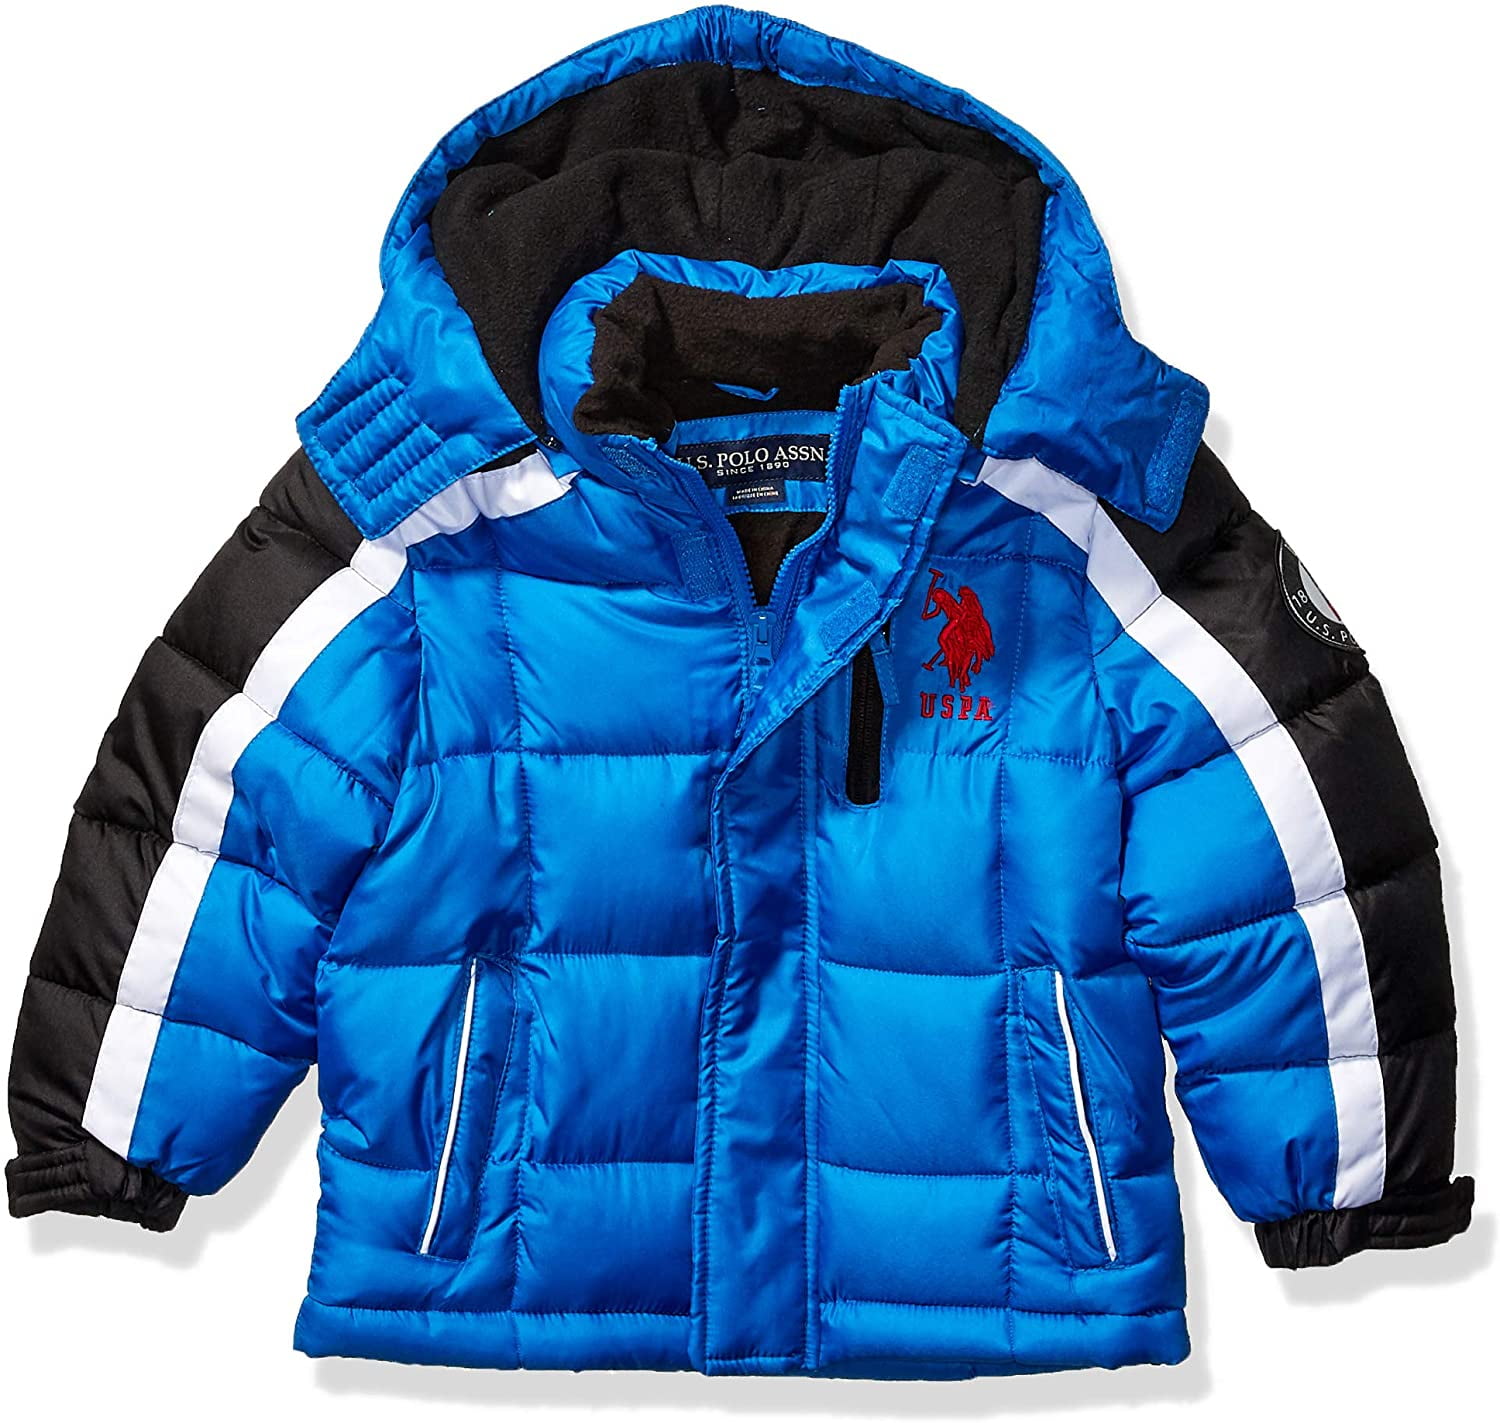 US Polo Association Boys' Toddler Bubble Jacket, Army Stripe Blue, 2T